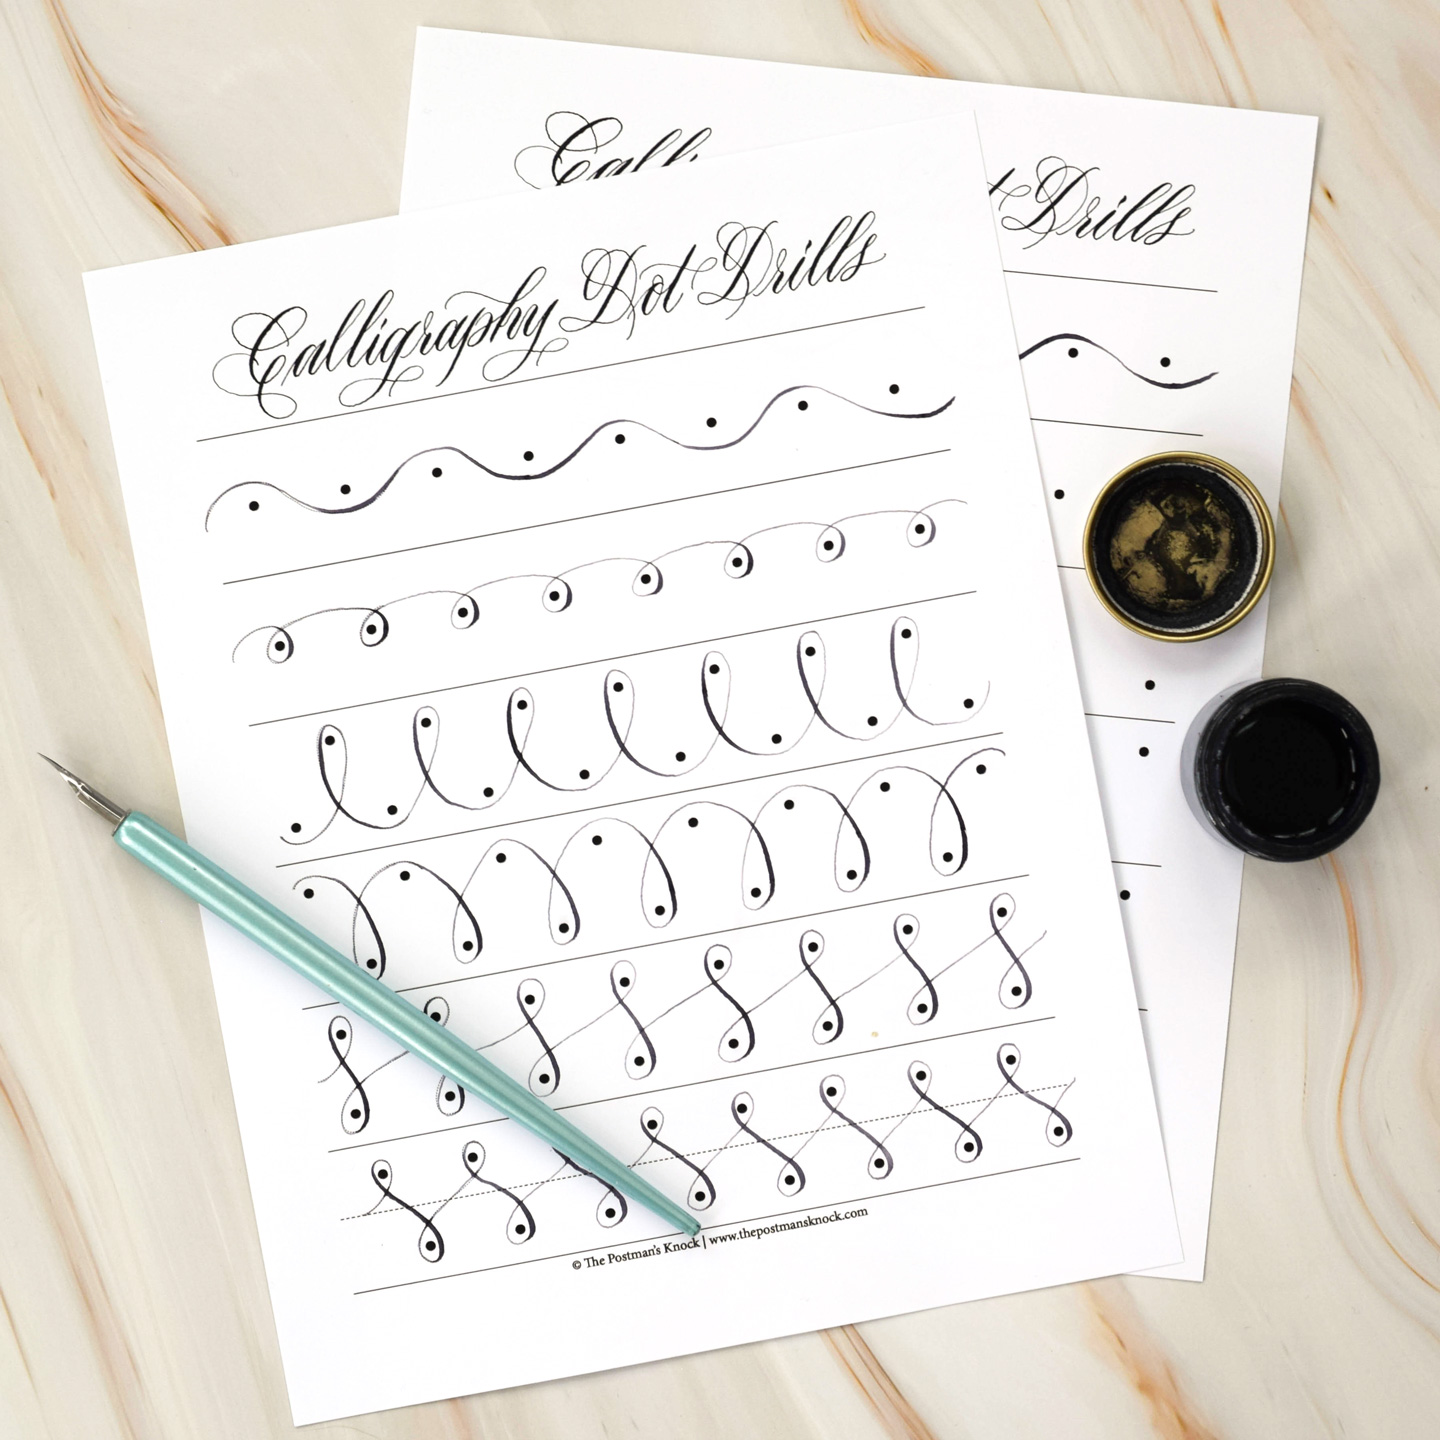 Calligraphy Dot Drills Printable Worksheet